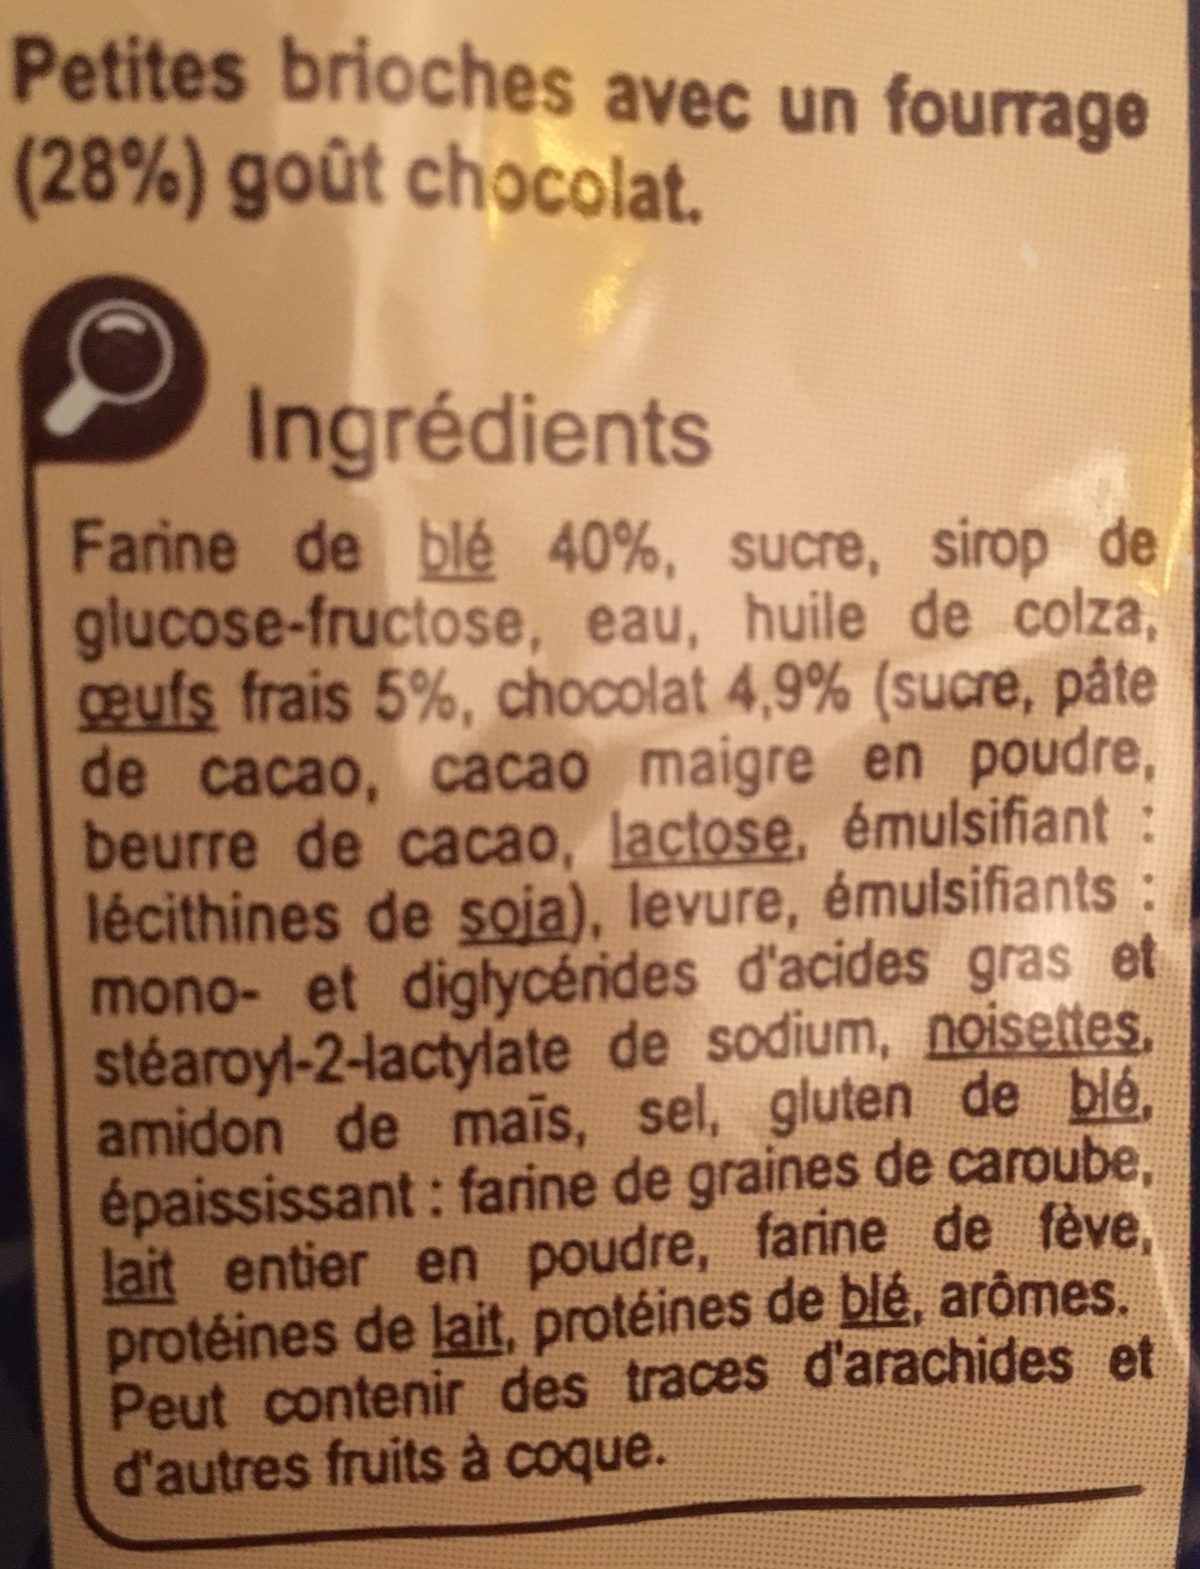 Woopy fourres goût chocolat - Ingredients - fr